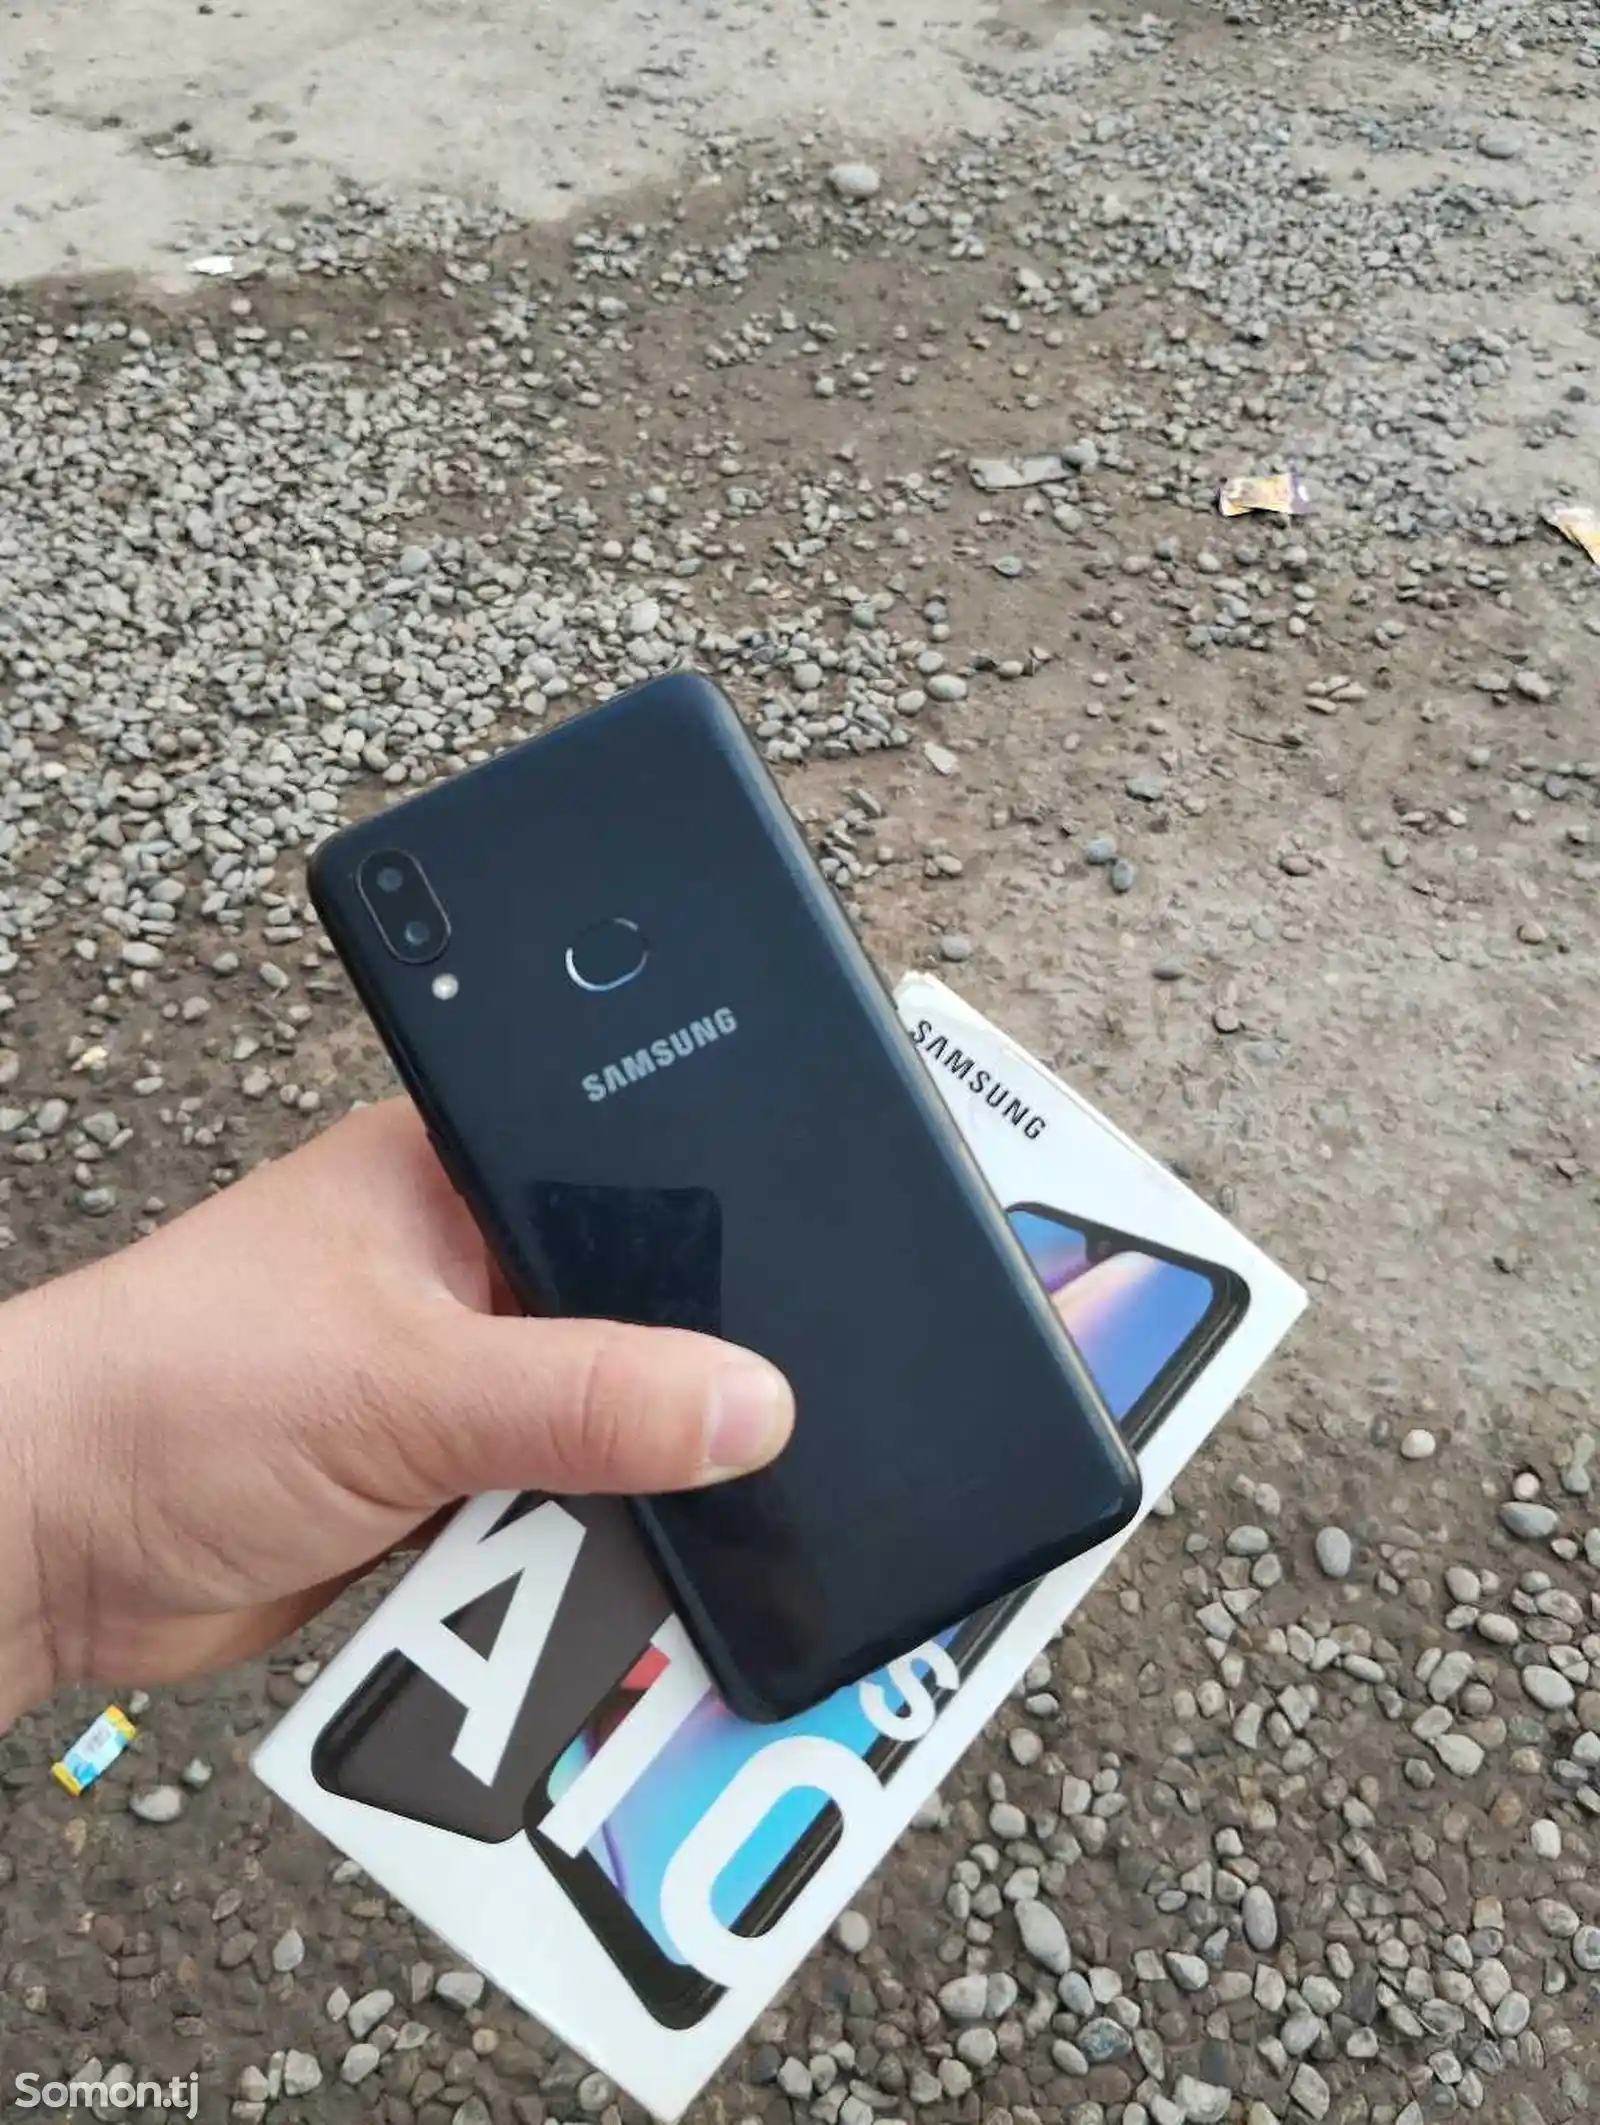 Samsung Galaxy A10s-1